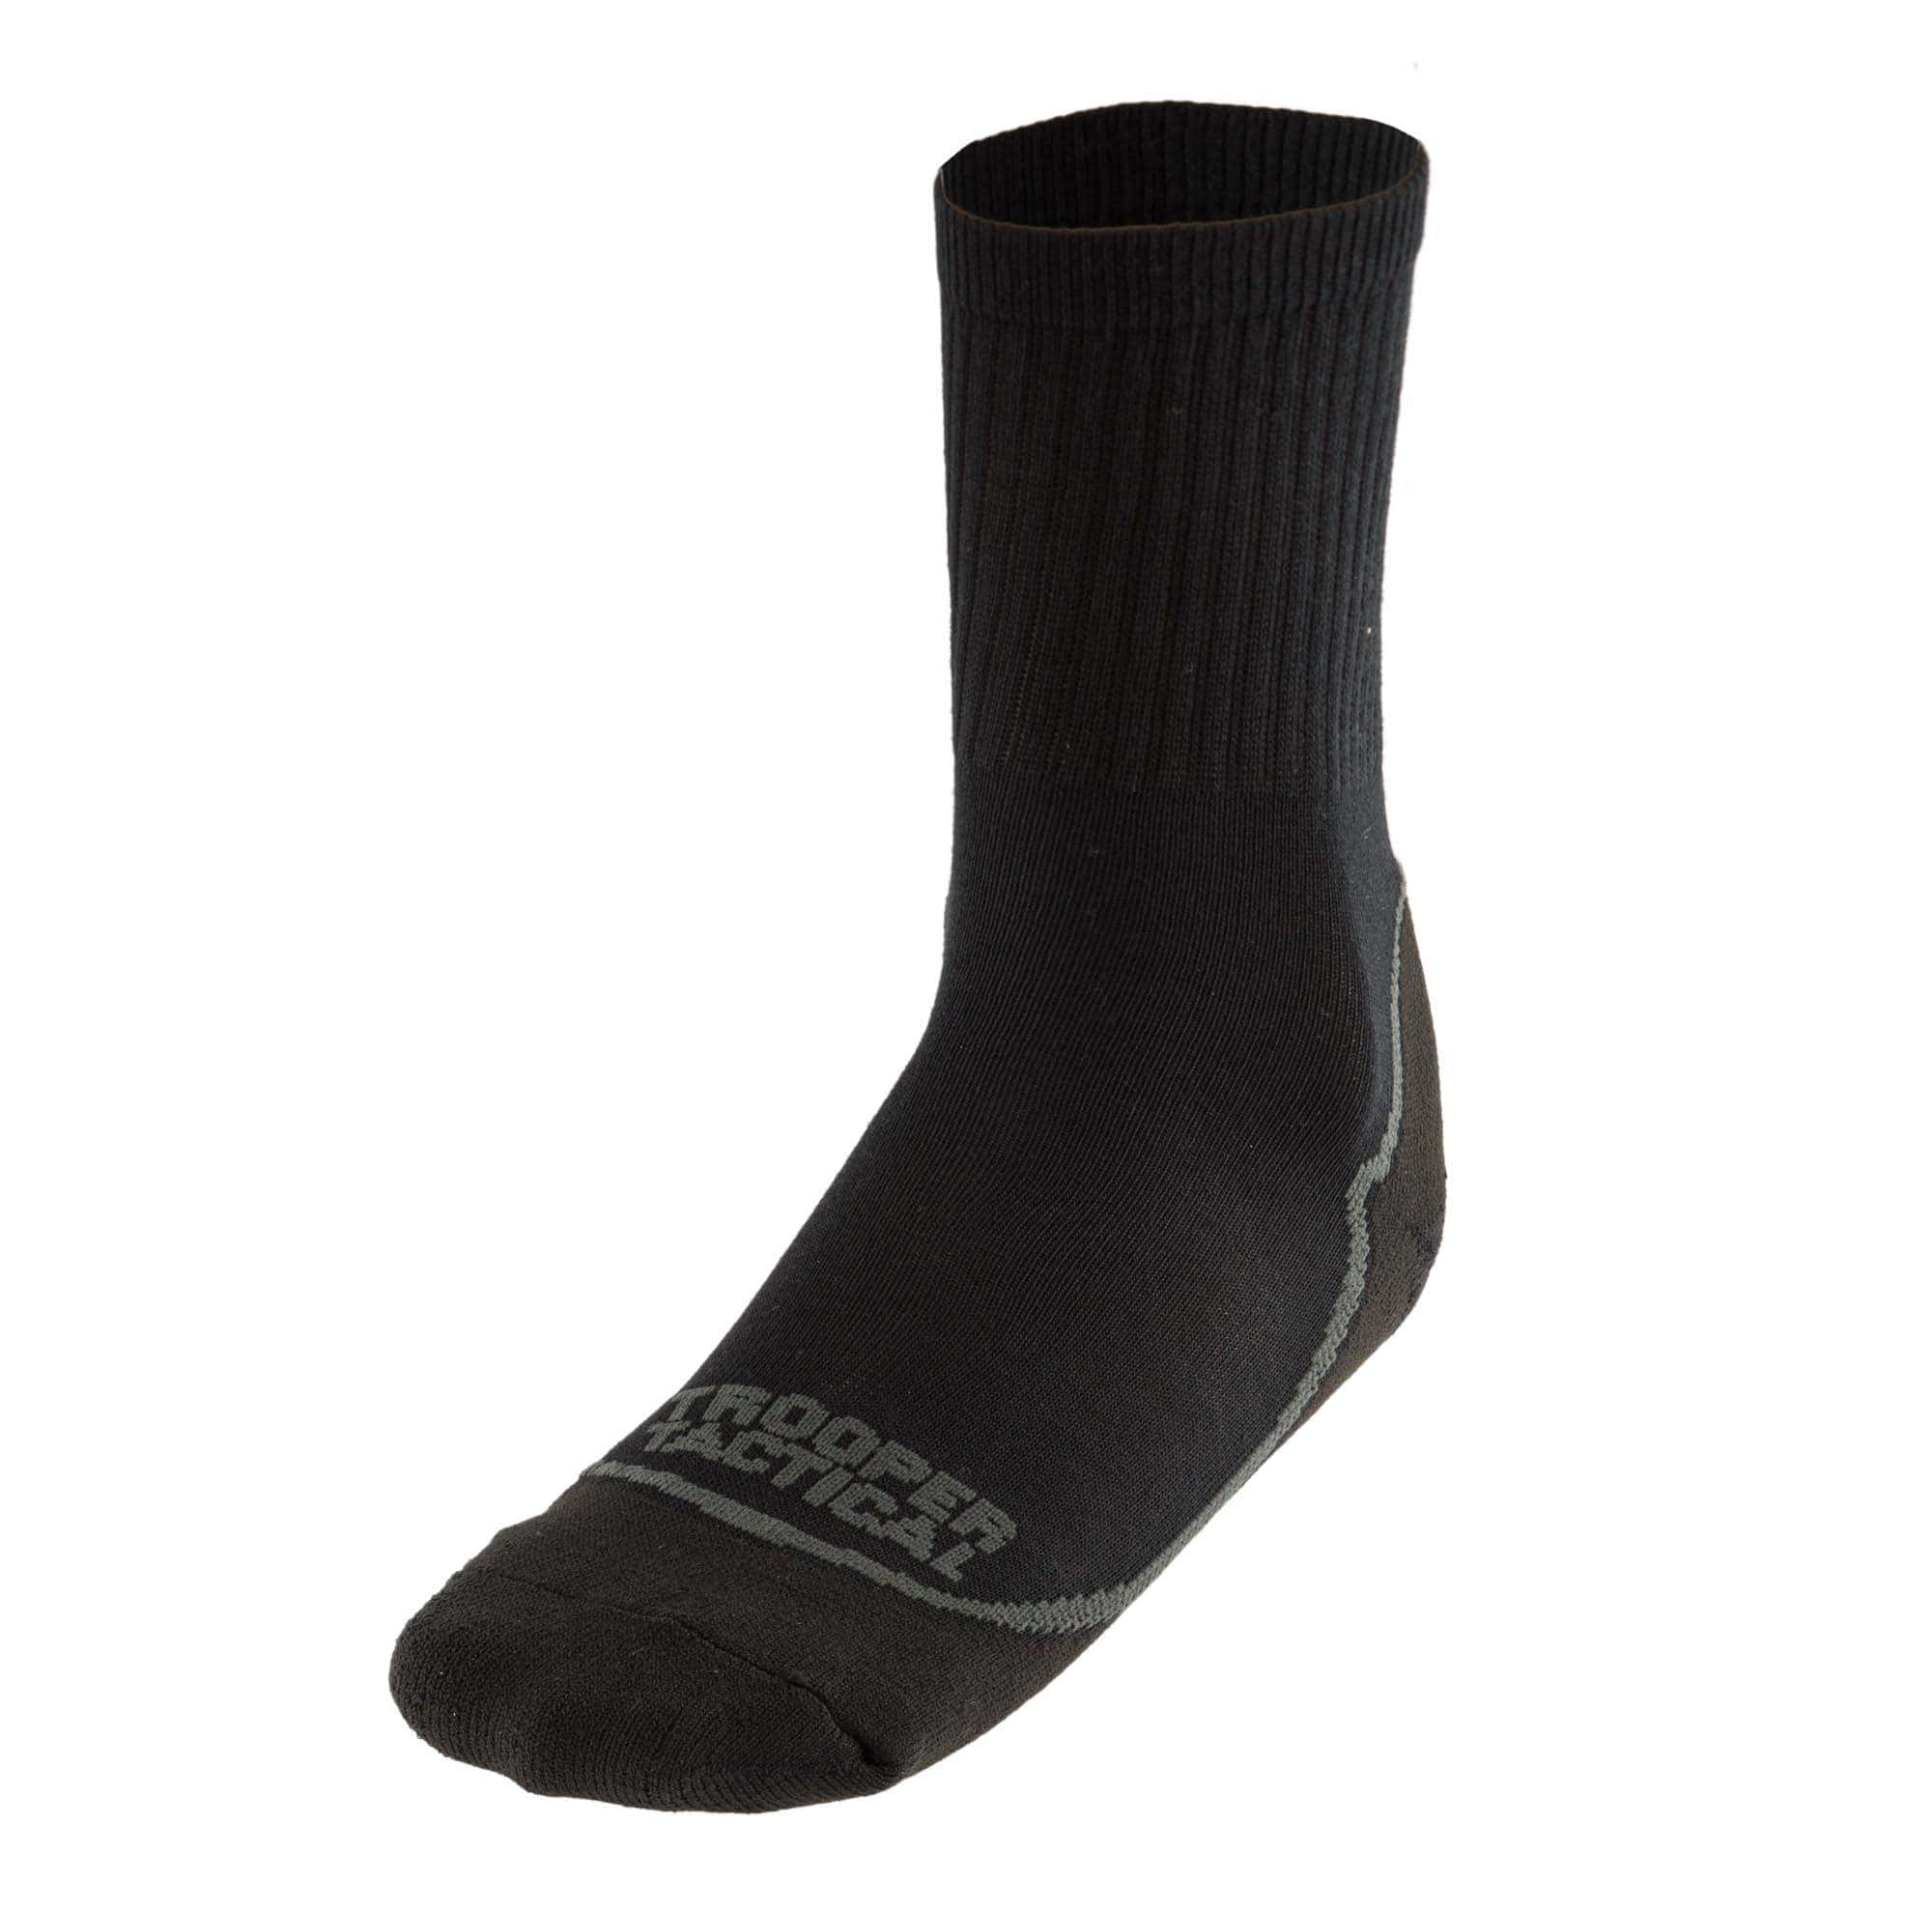 Socks TROOPER black or khaki - VCH40037